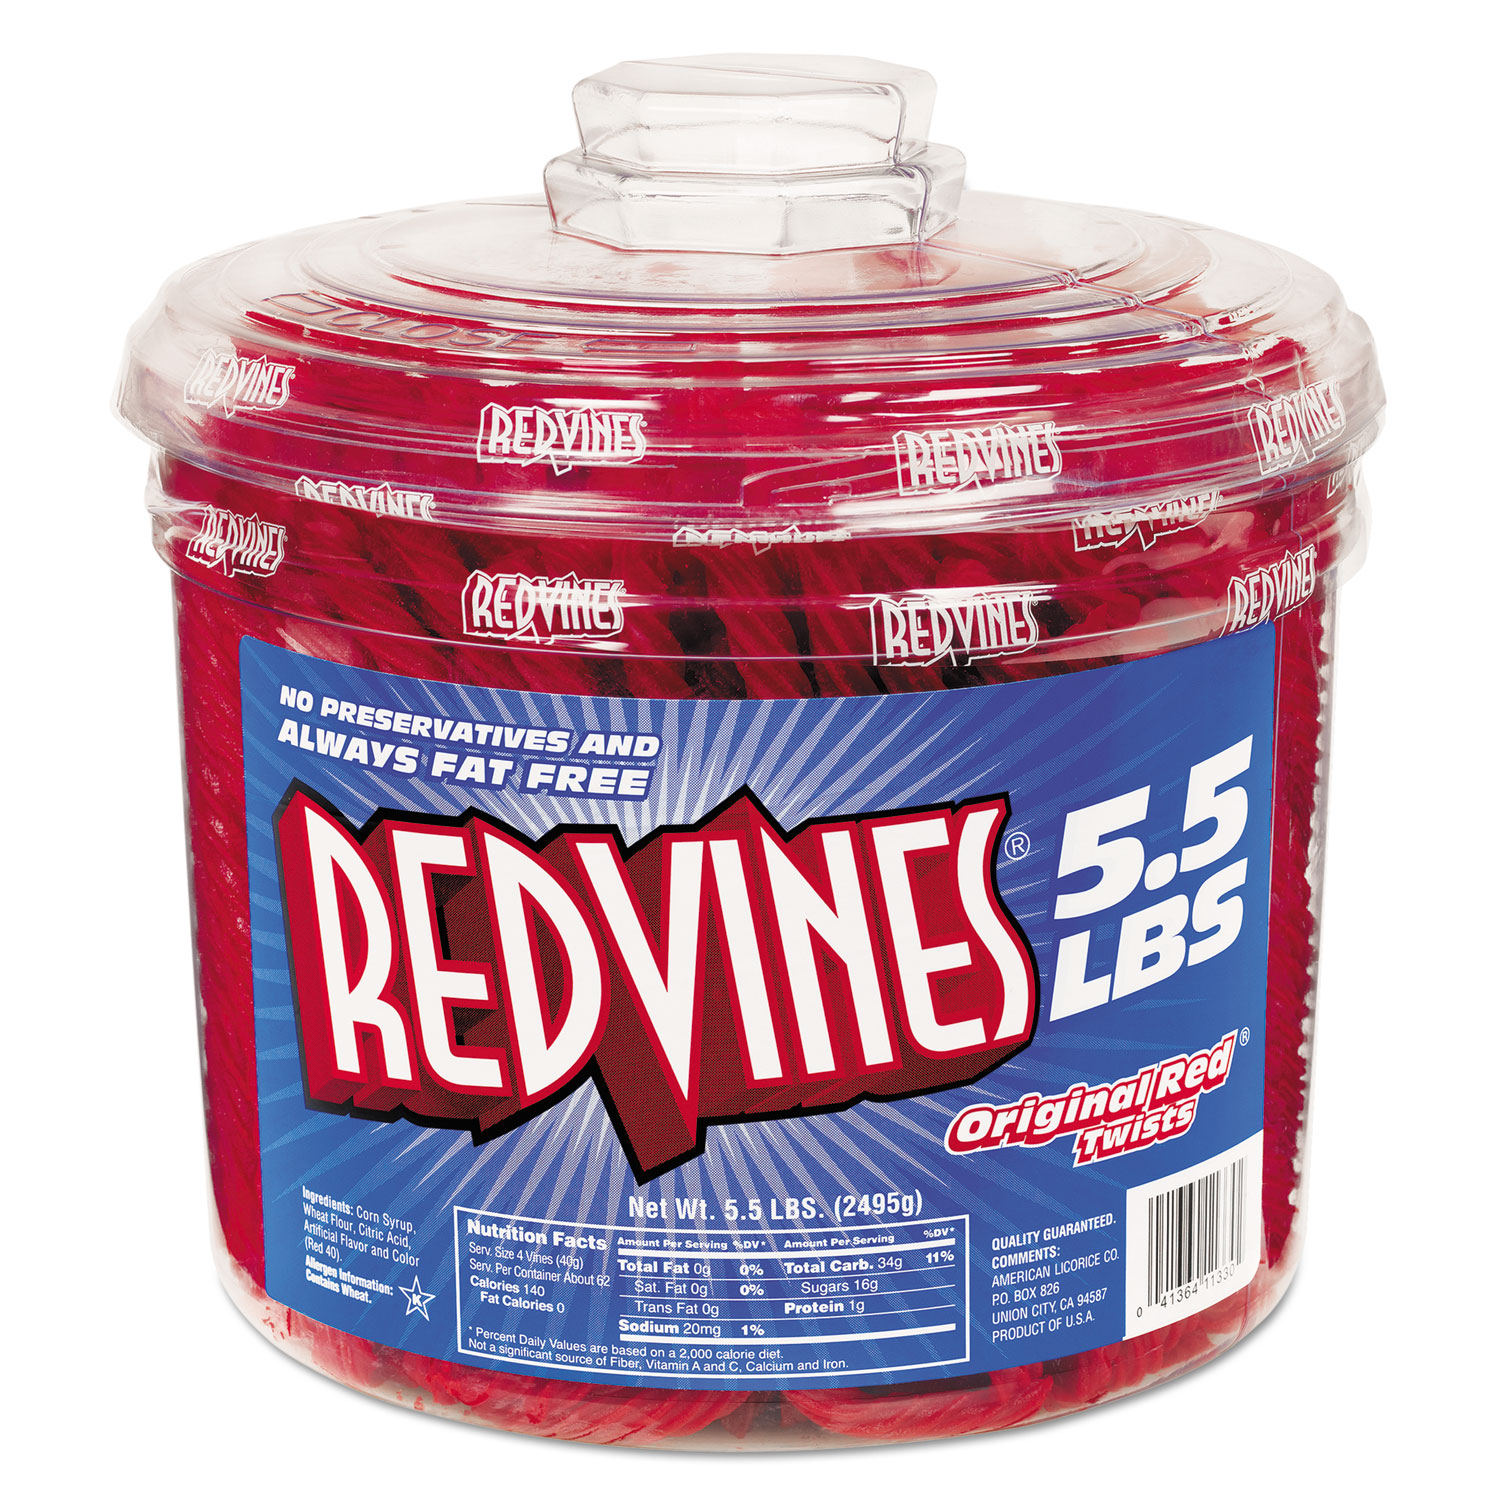 Original Red Twists, 5.5 lb Tub